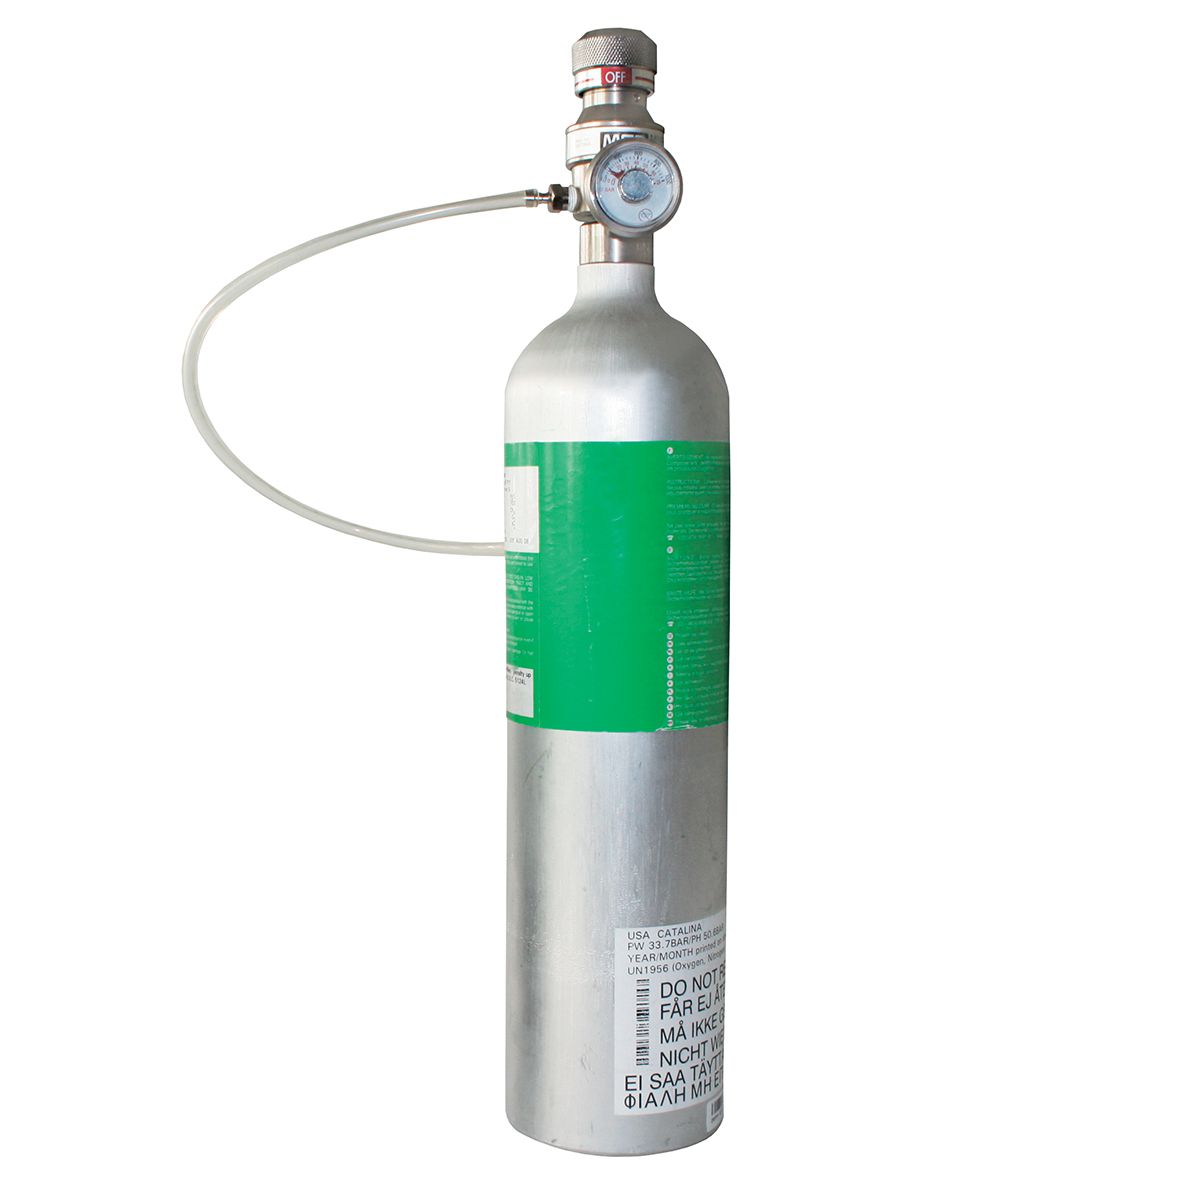 MSA Mischgasflasche 58 L - 1,45 Vol% CH4, 300 ppm CO, 10 ppm H2S, 15 Vol% O2